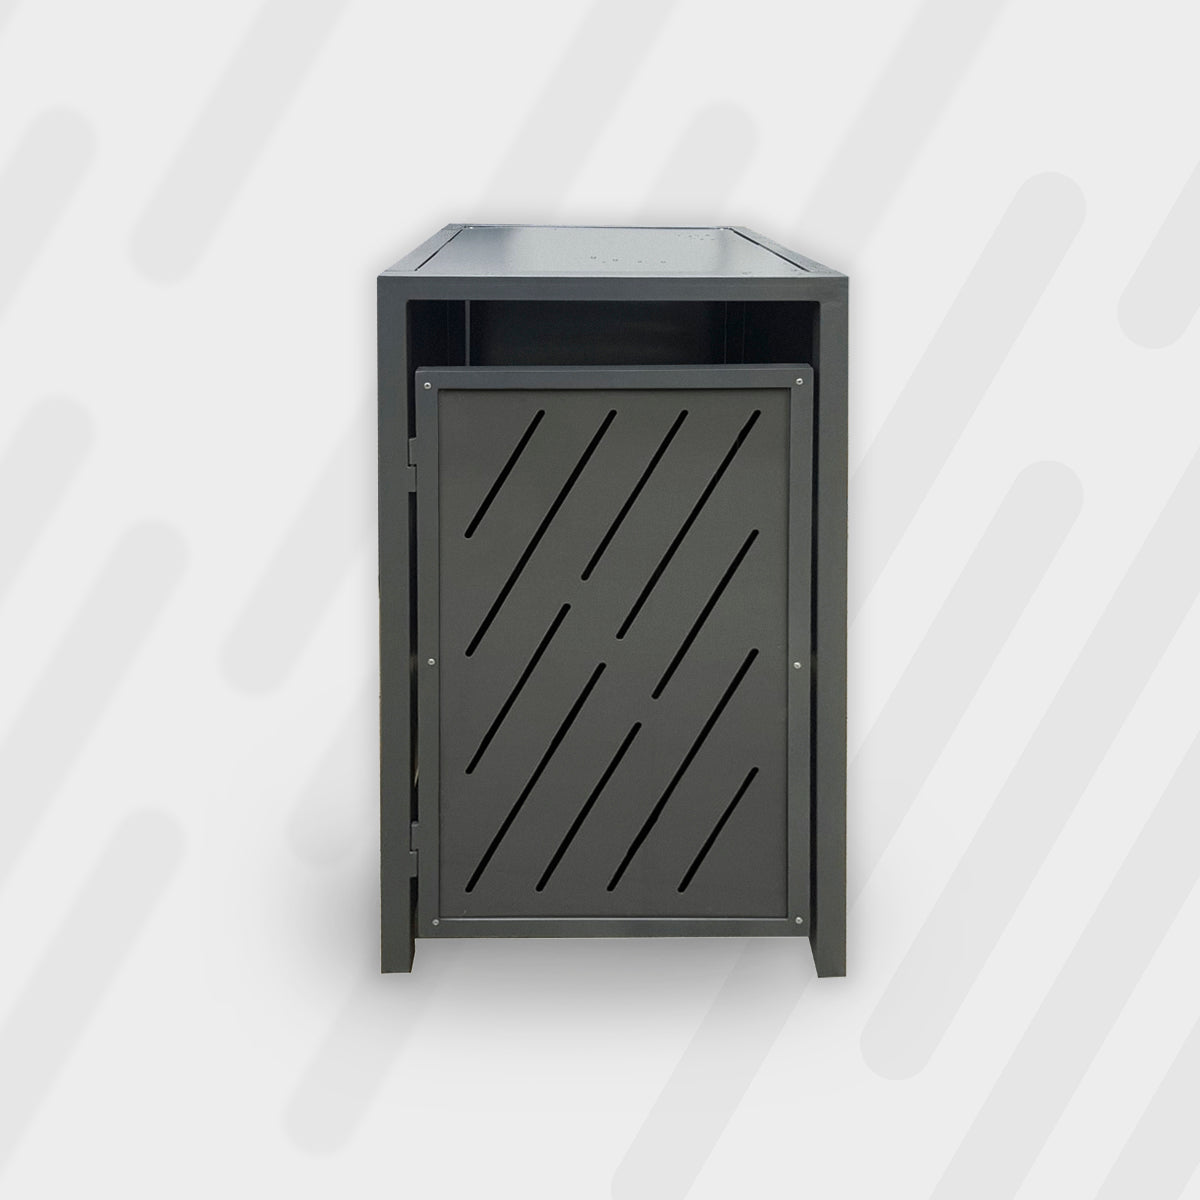 <tc>PREMIUM Metal 1 bin garbage bin box</tc>